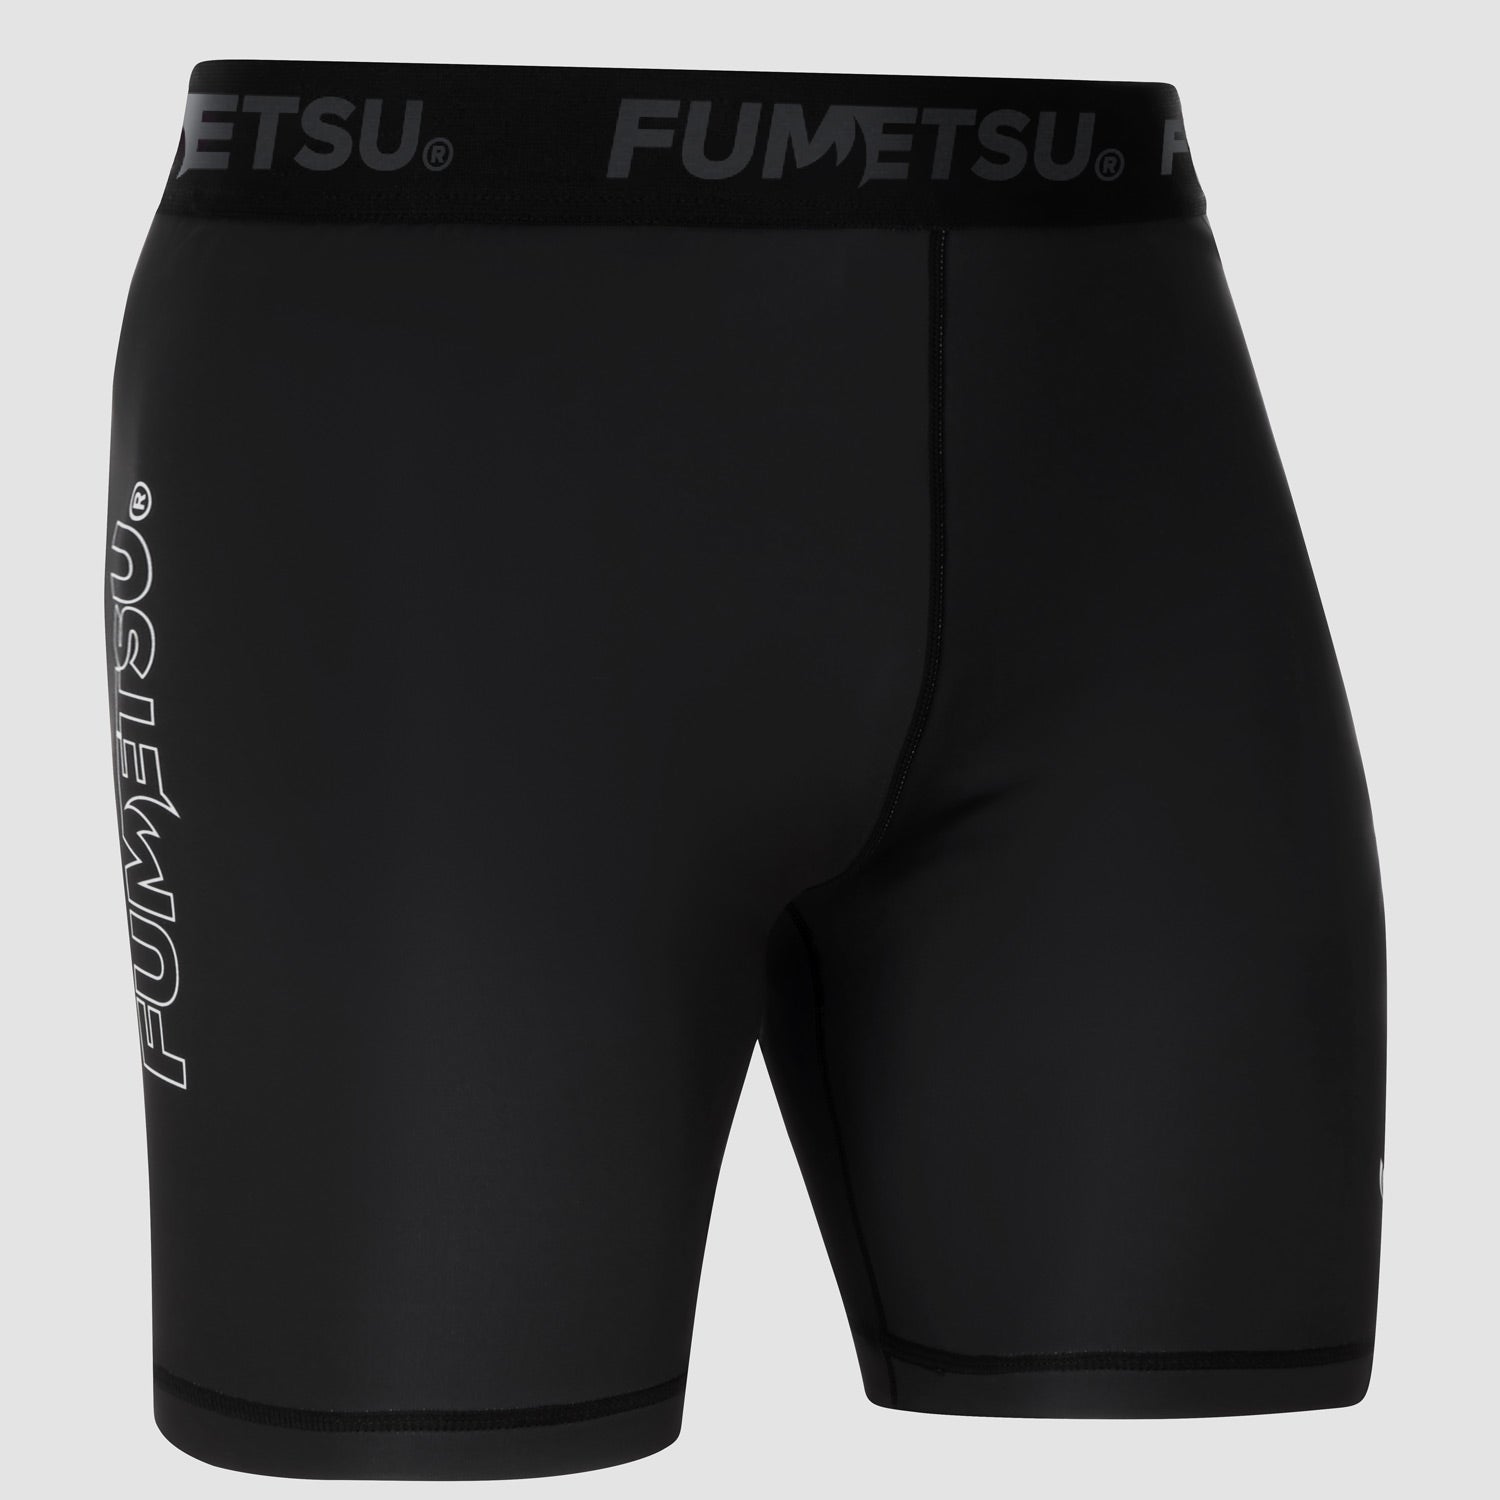 Men's MMA Fight Shorts from Fumetsu